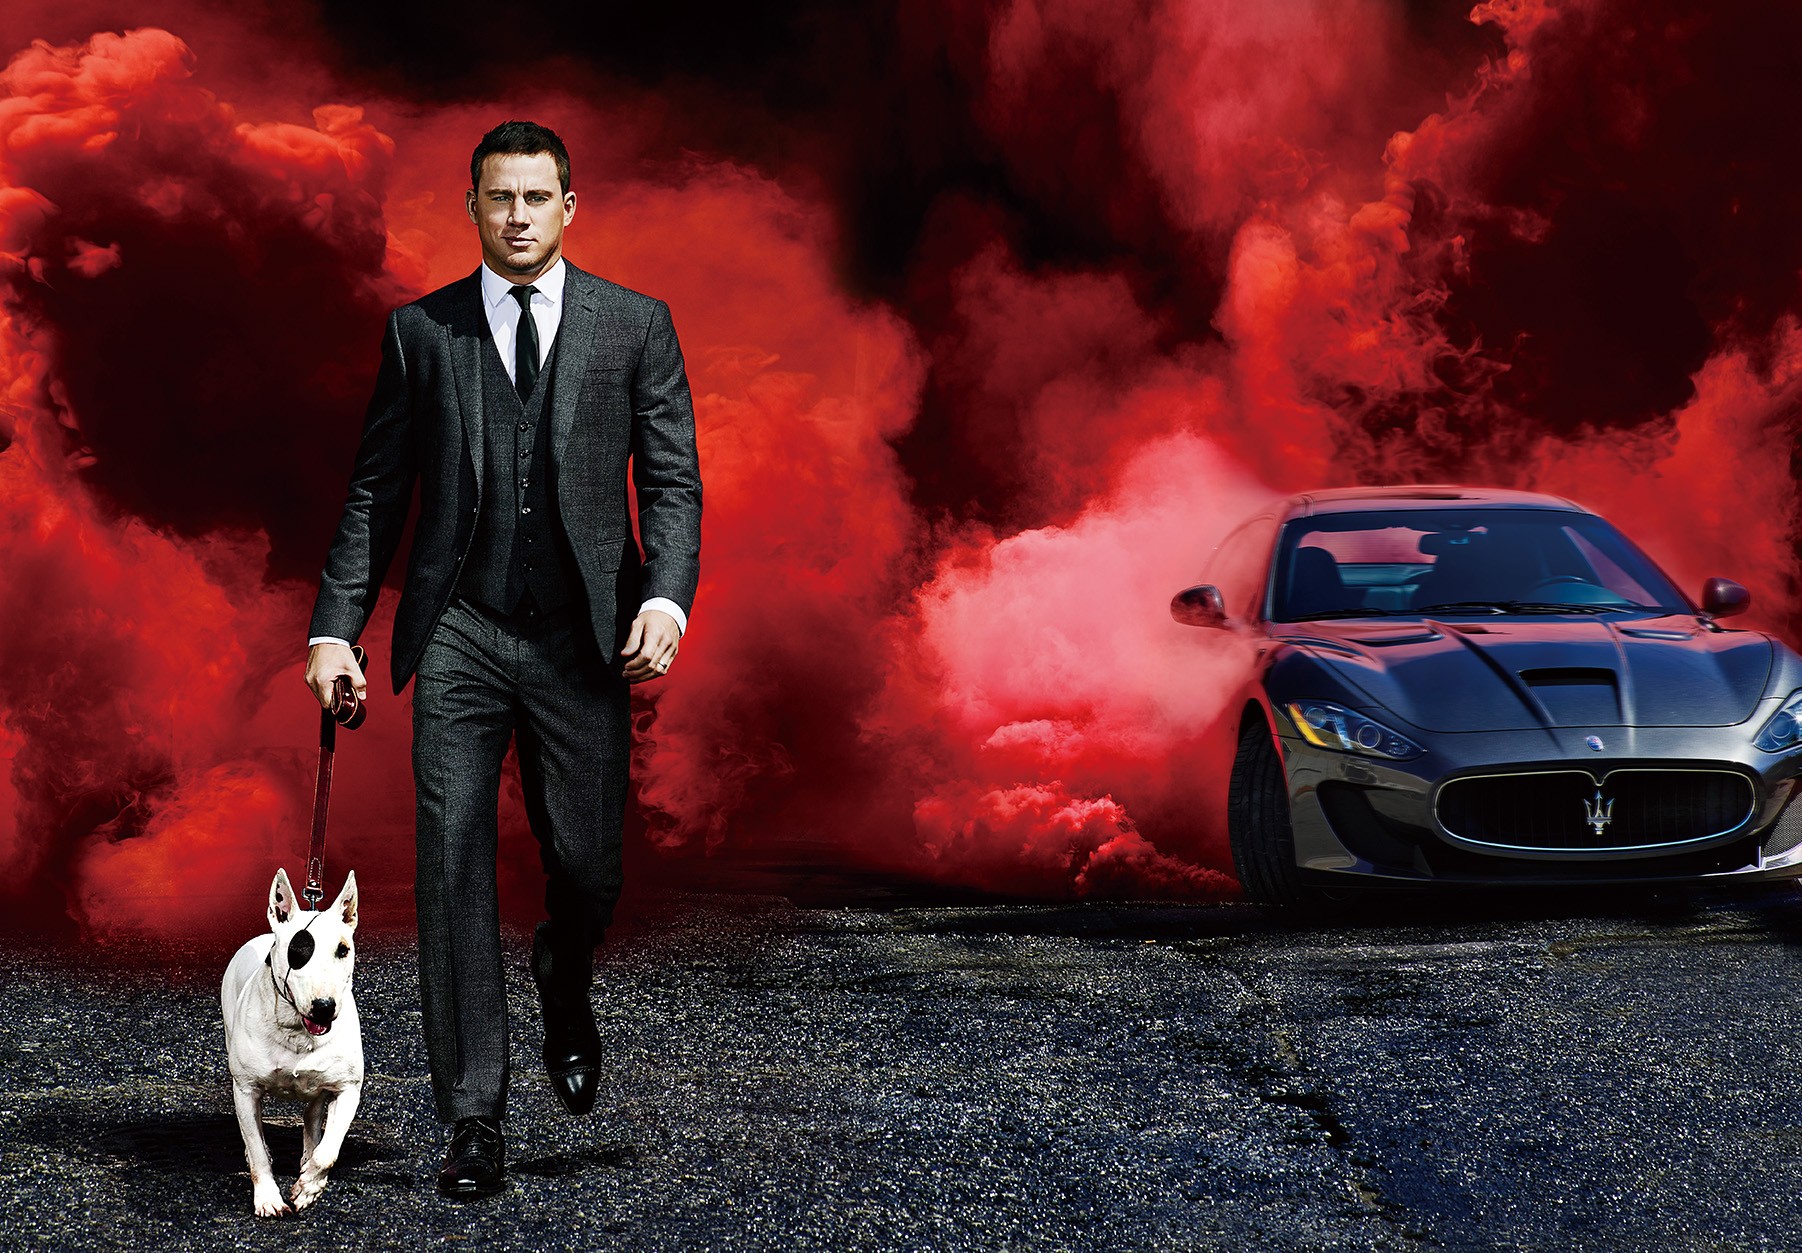 People 1802x1253 Channing Tatum dog Maserati car men animals suits smoke vehicle actor Maserati GranTurismo